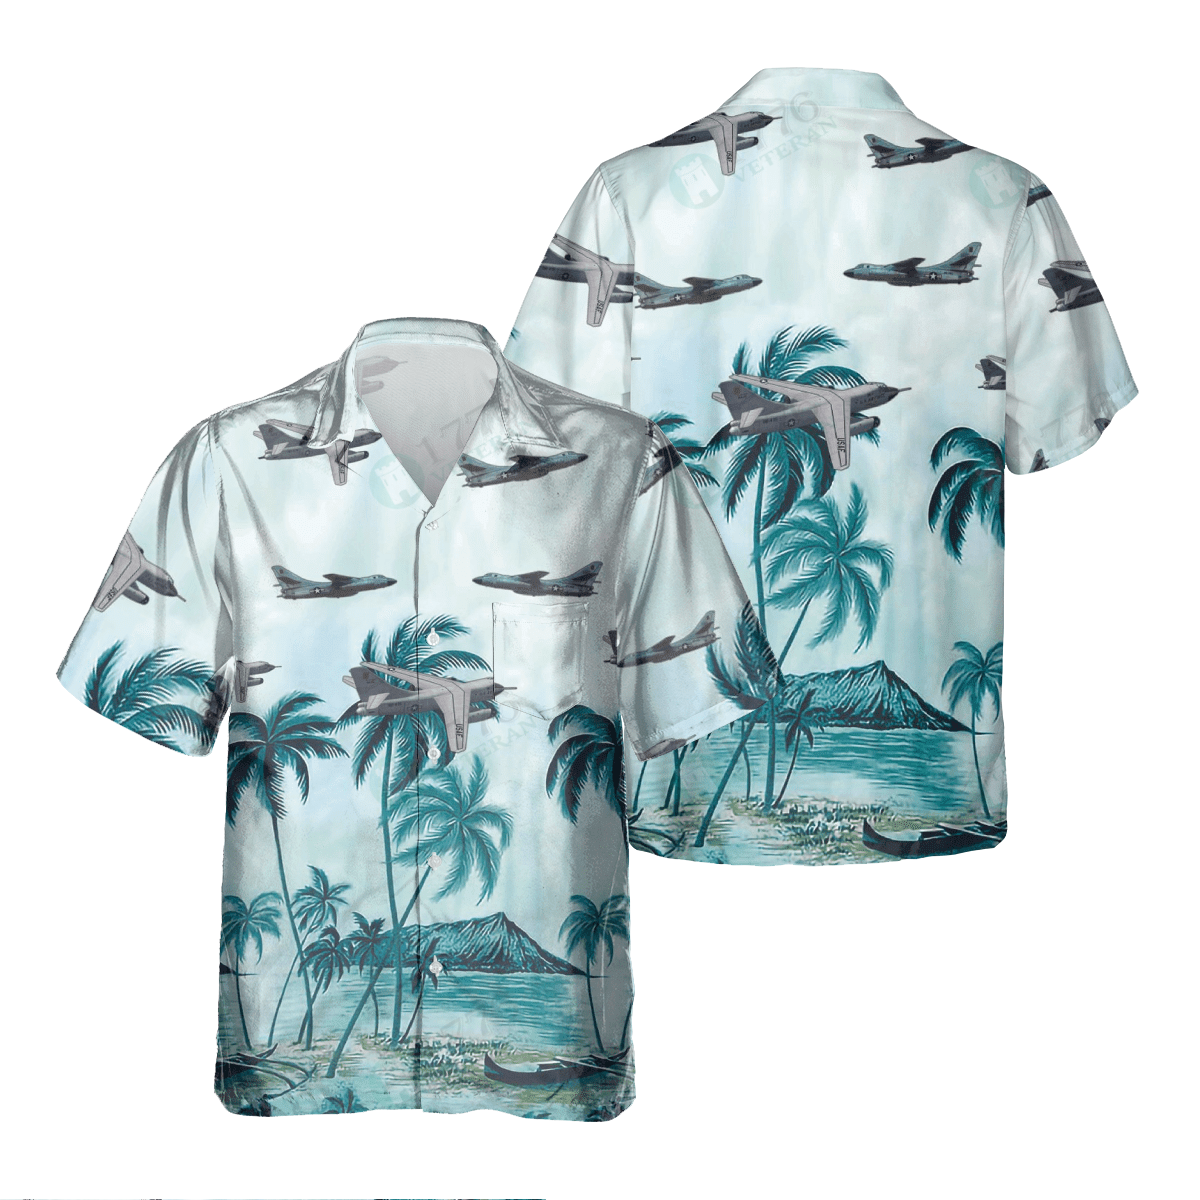 B-66 DESTROYER Pocket Hawaiian Shirt/ Hawaiian Shirt for Men Dad Veteran/ Patriot Day